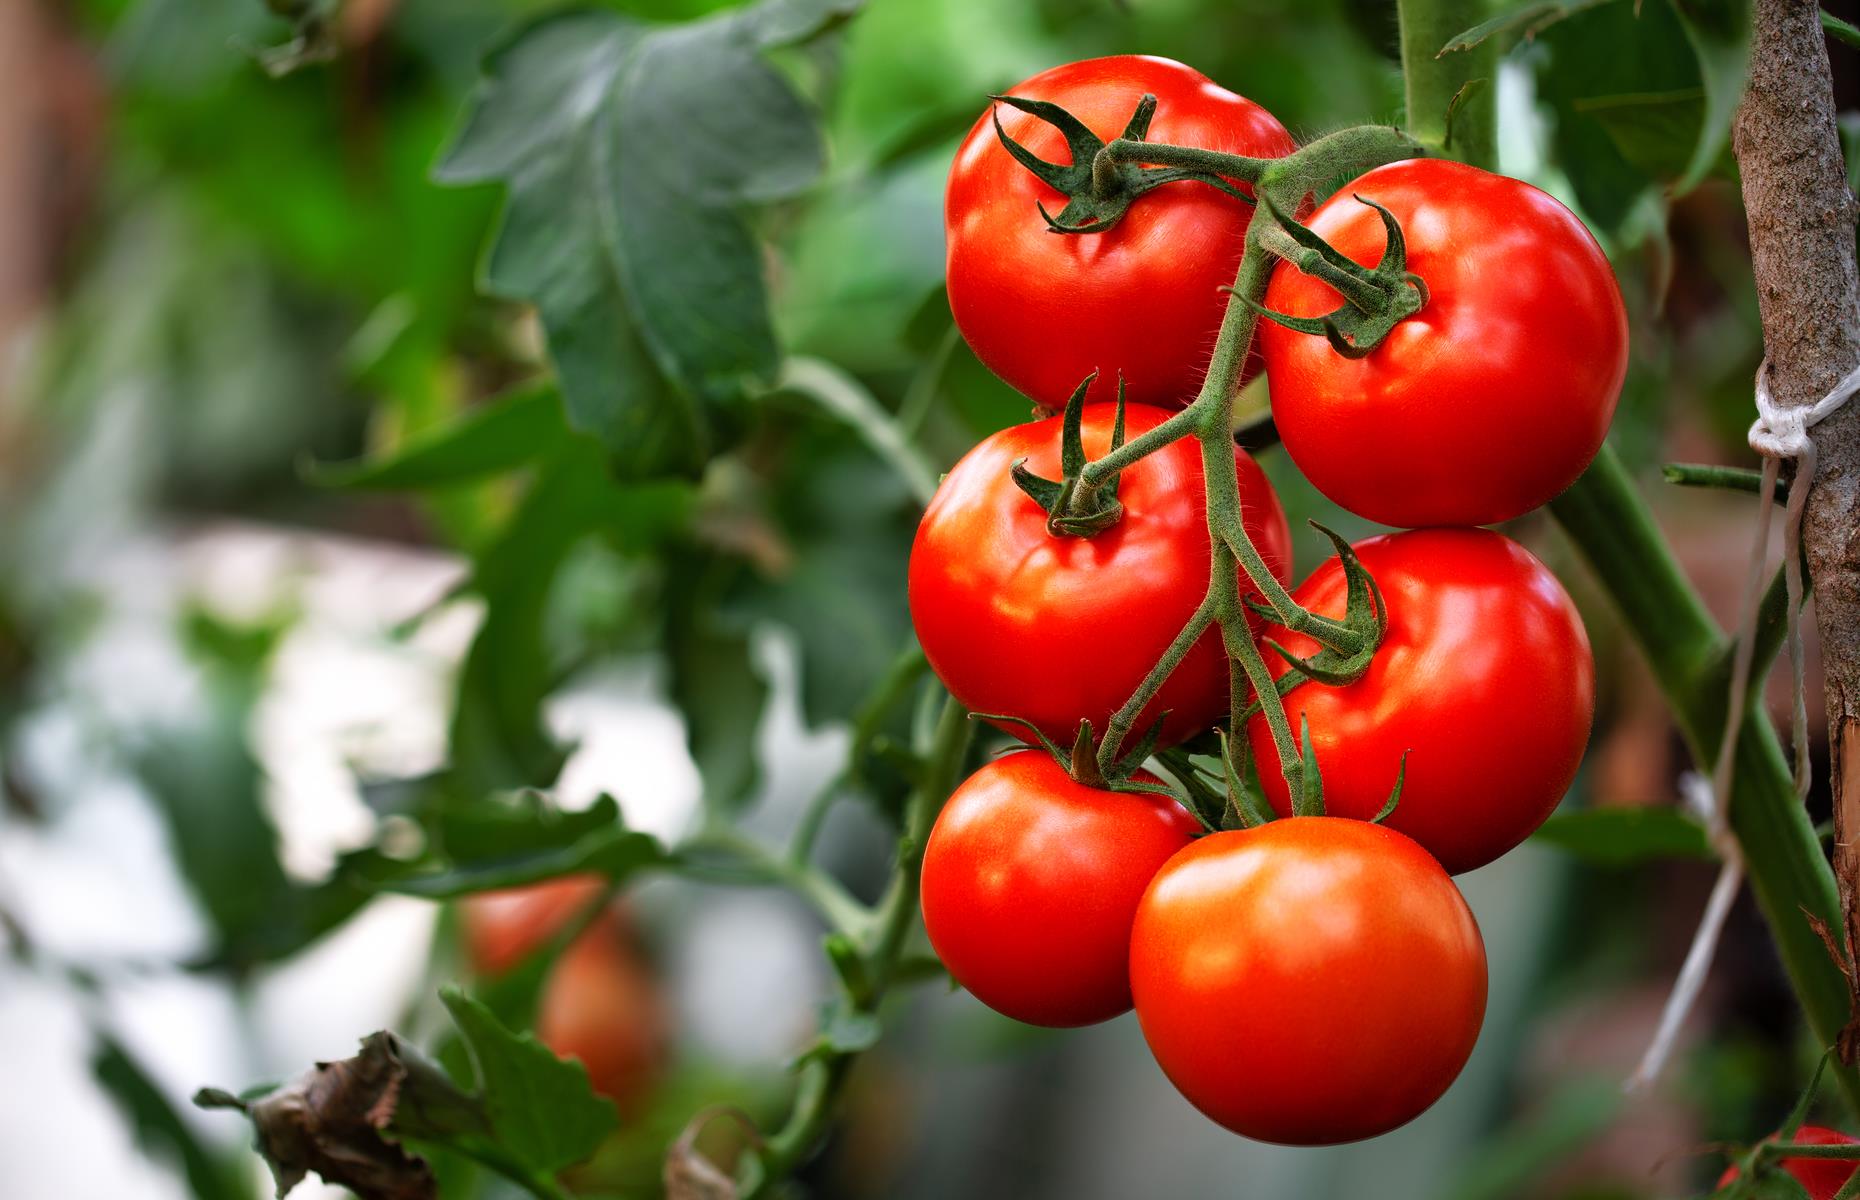 Study on how to make tomatoes taste better: $1.5 million 